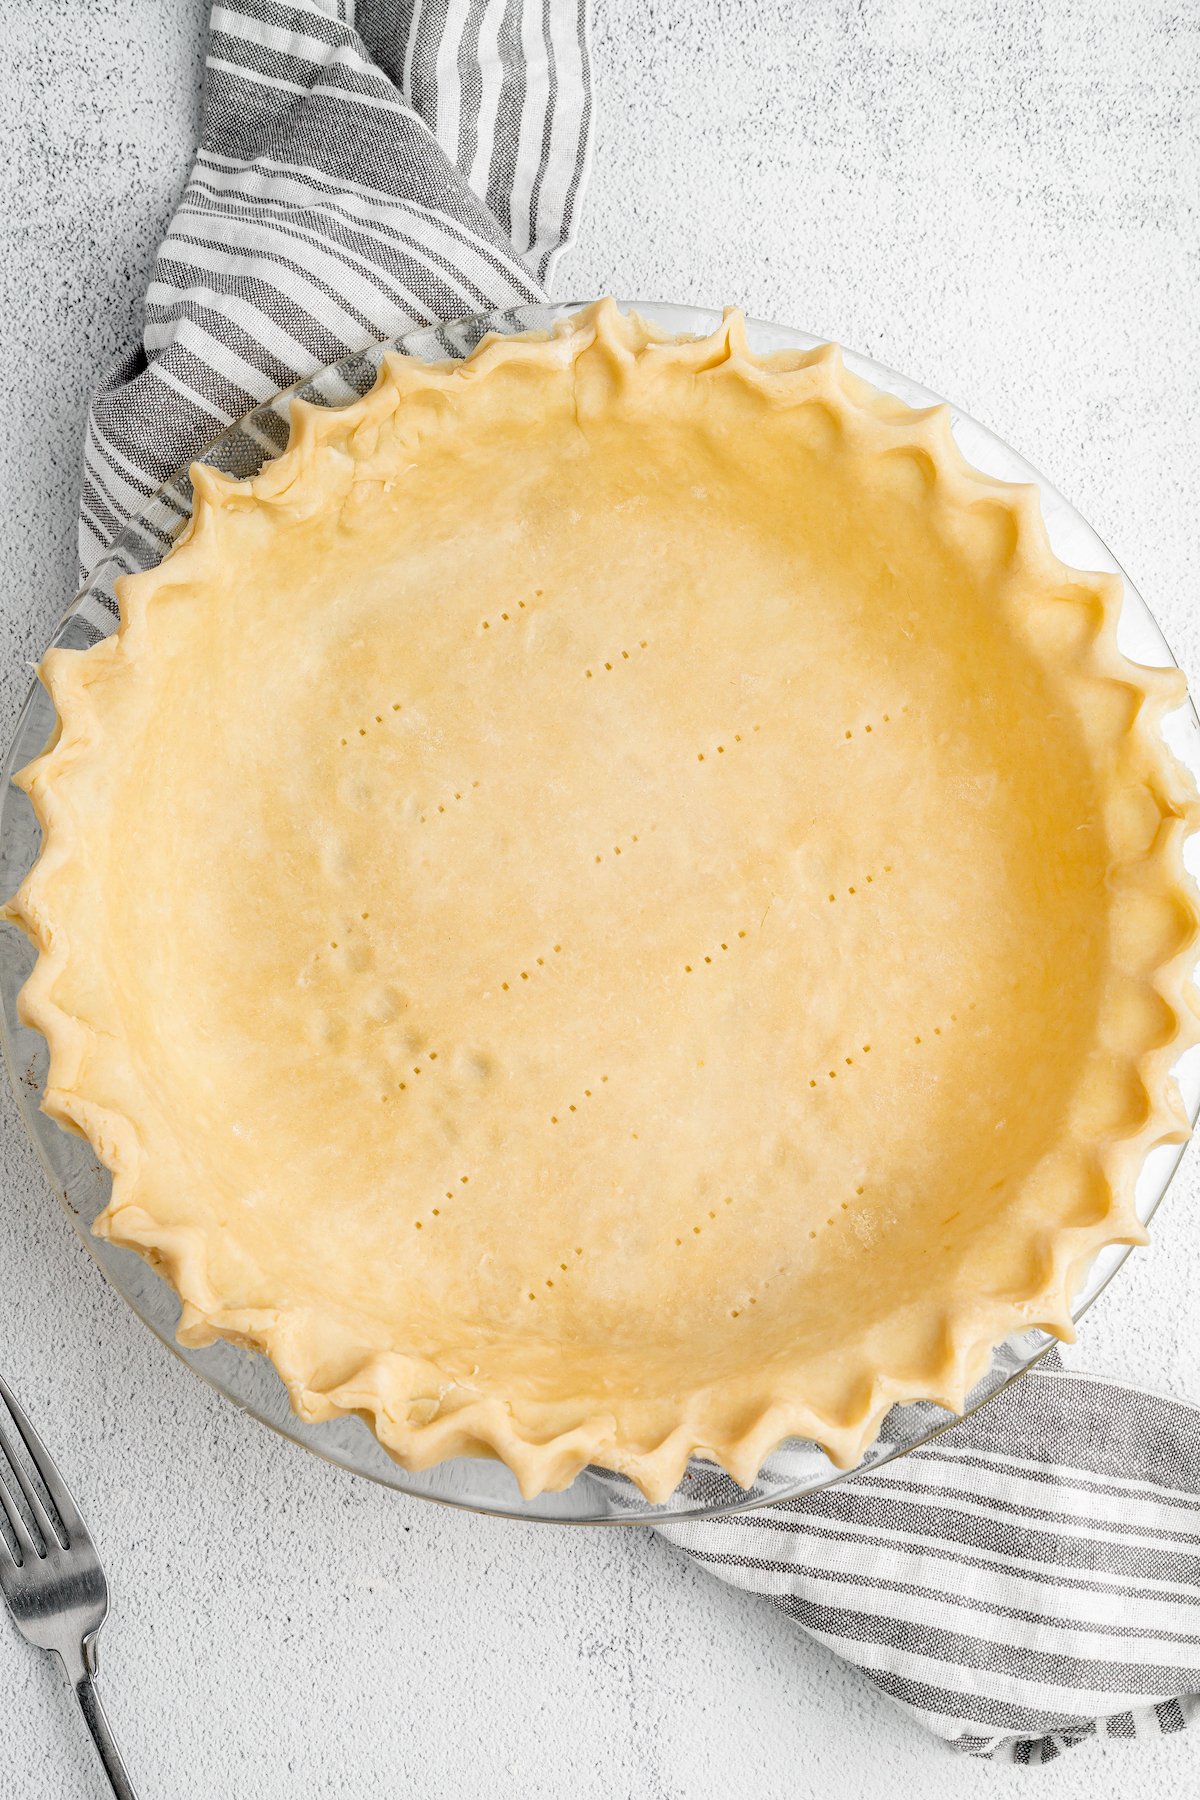 Top view of pie dough inside a pie tin.